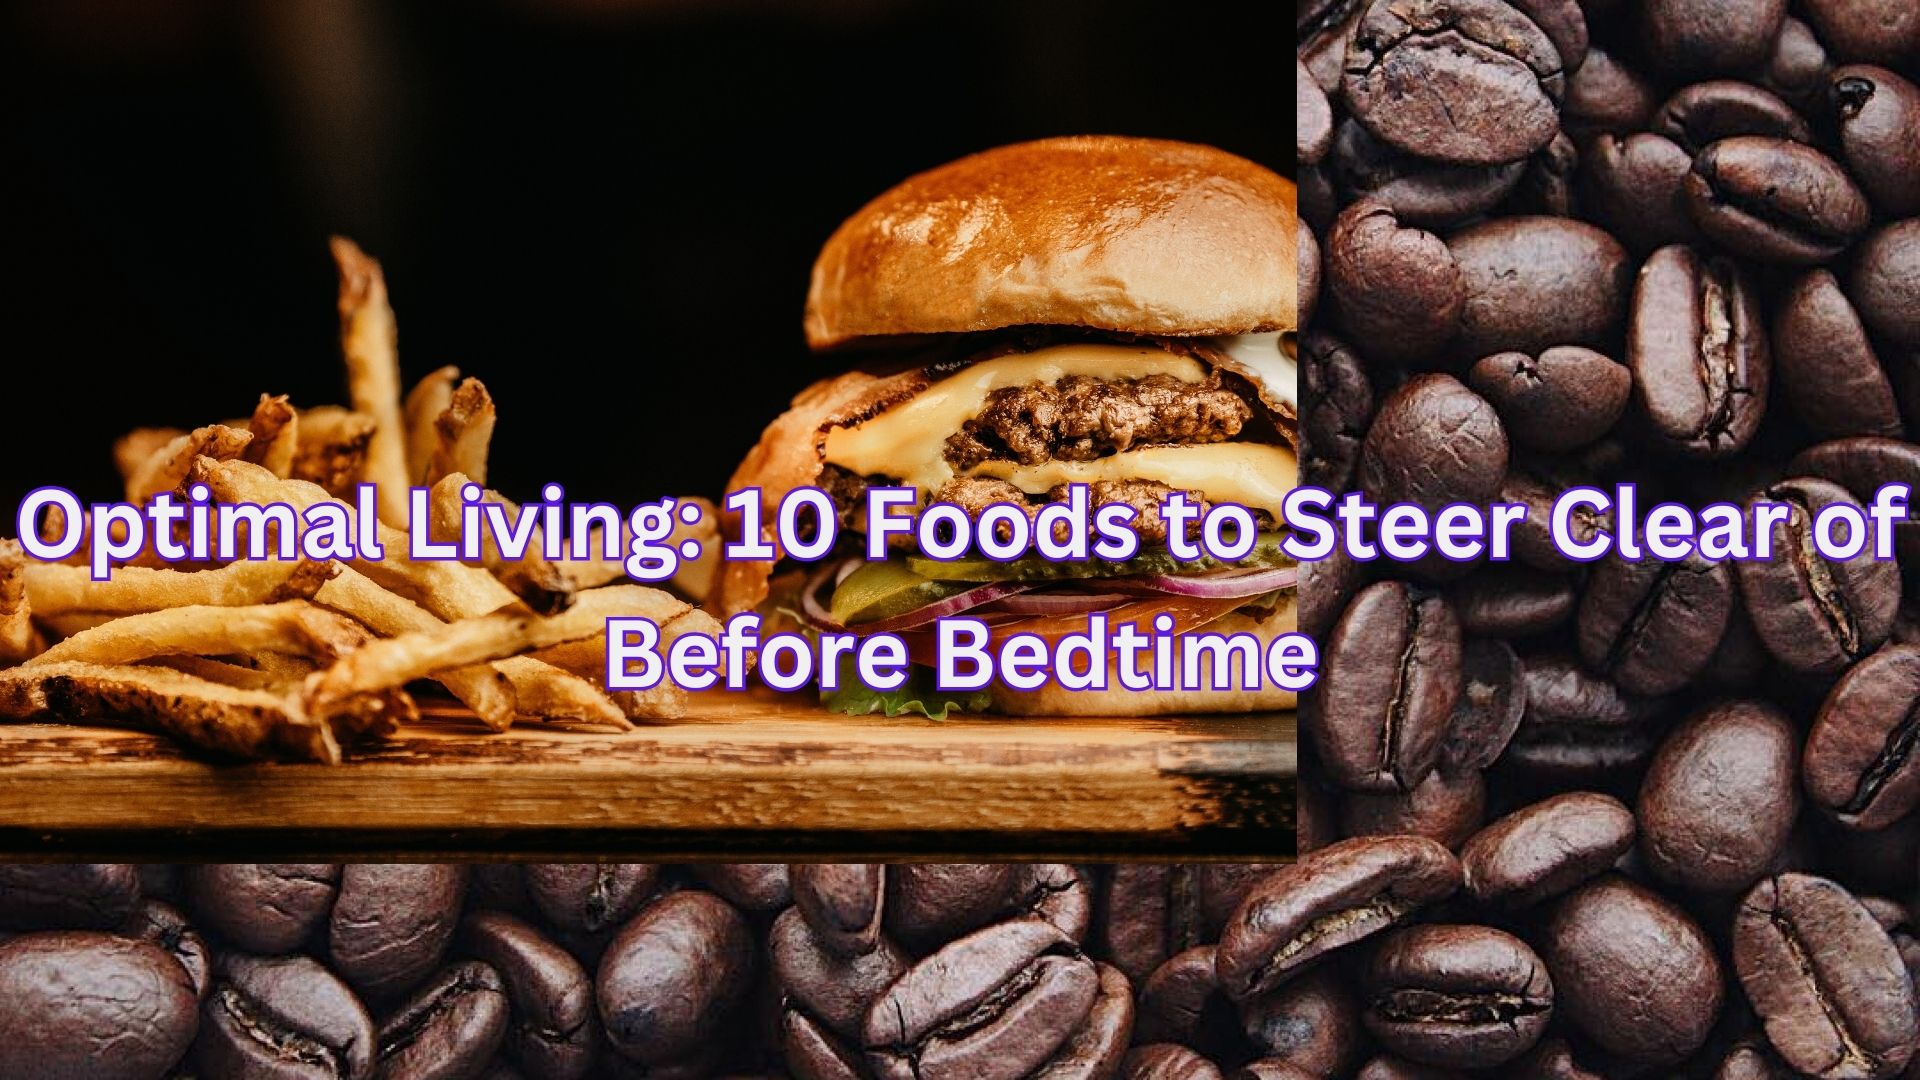 Optimal Living: 10 Foods to Steer Clear of Before Bedtime